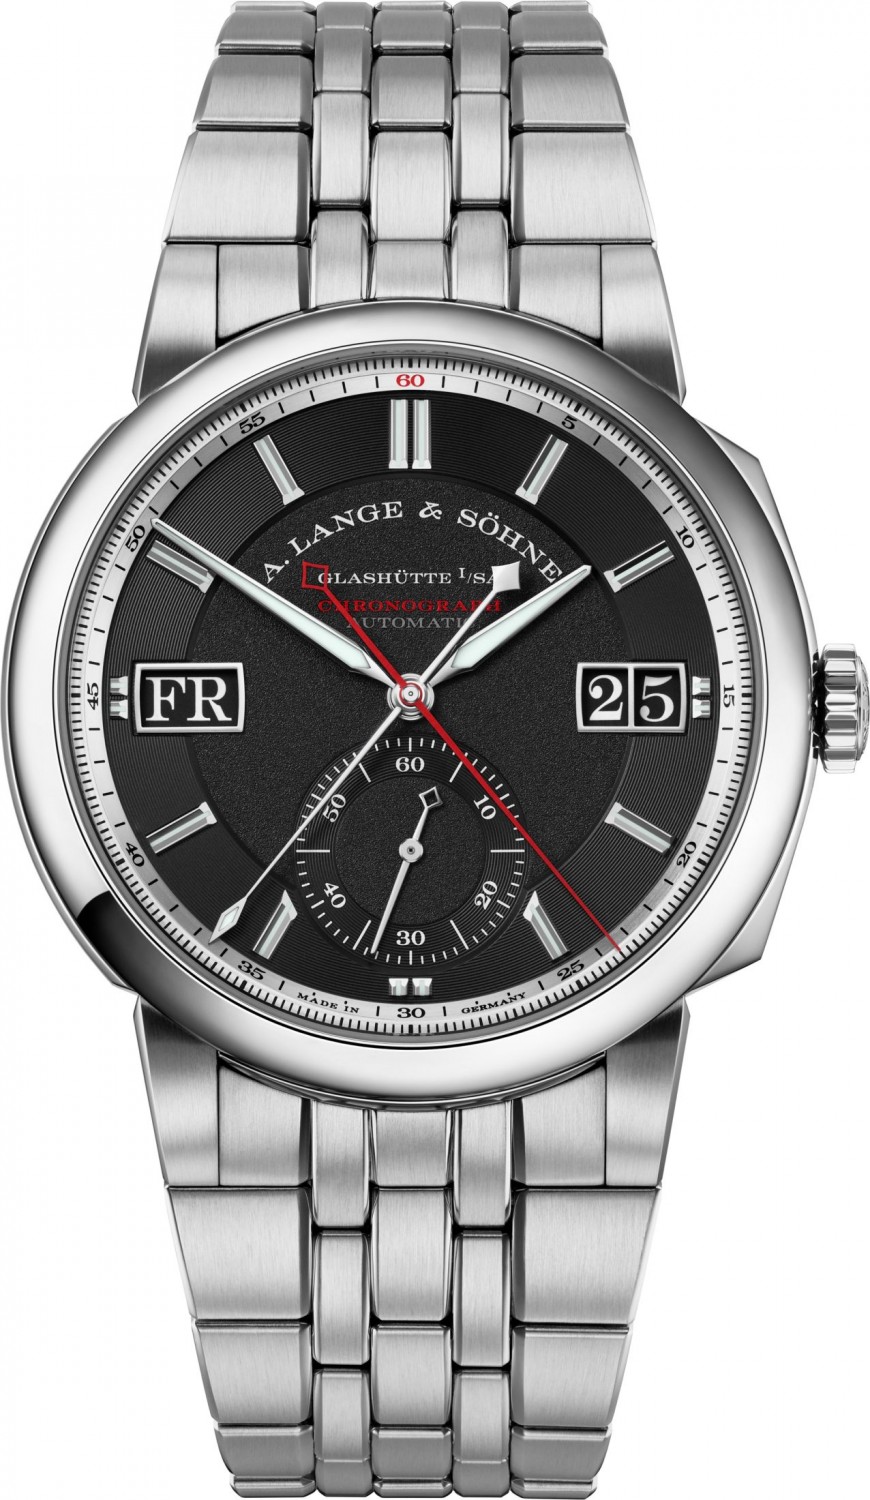 Watches & Wonders 2023: самые впечатляющие мужские часы